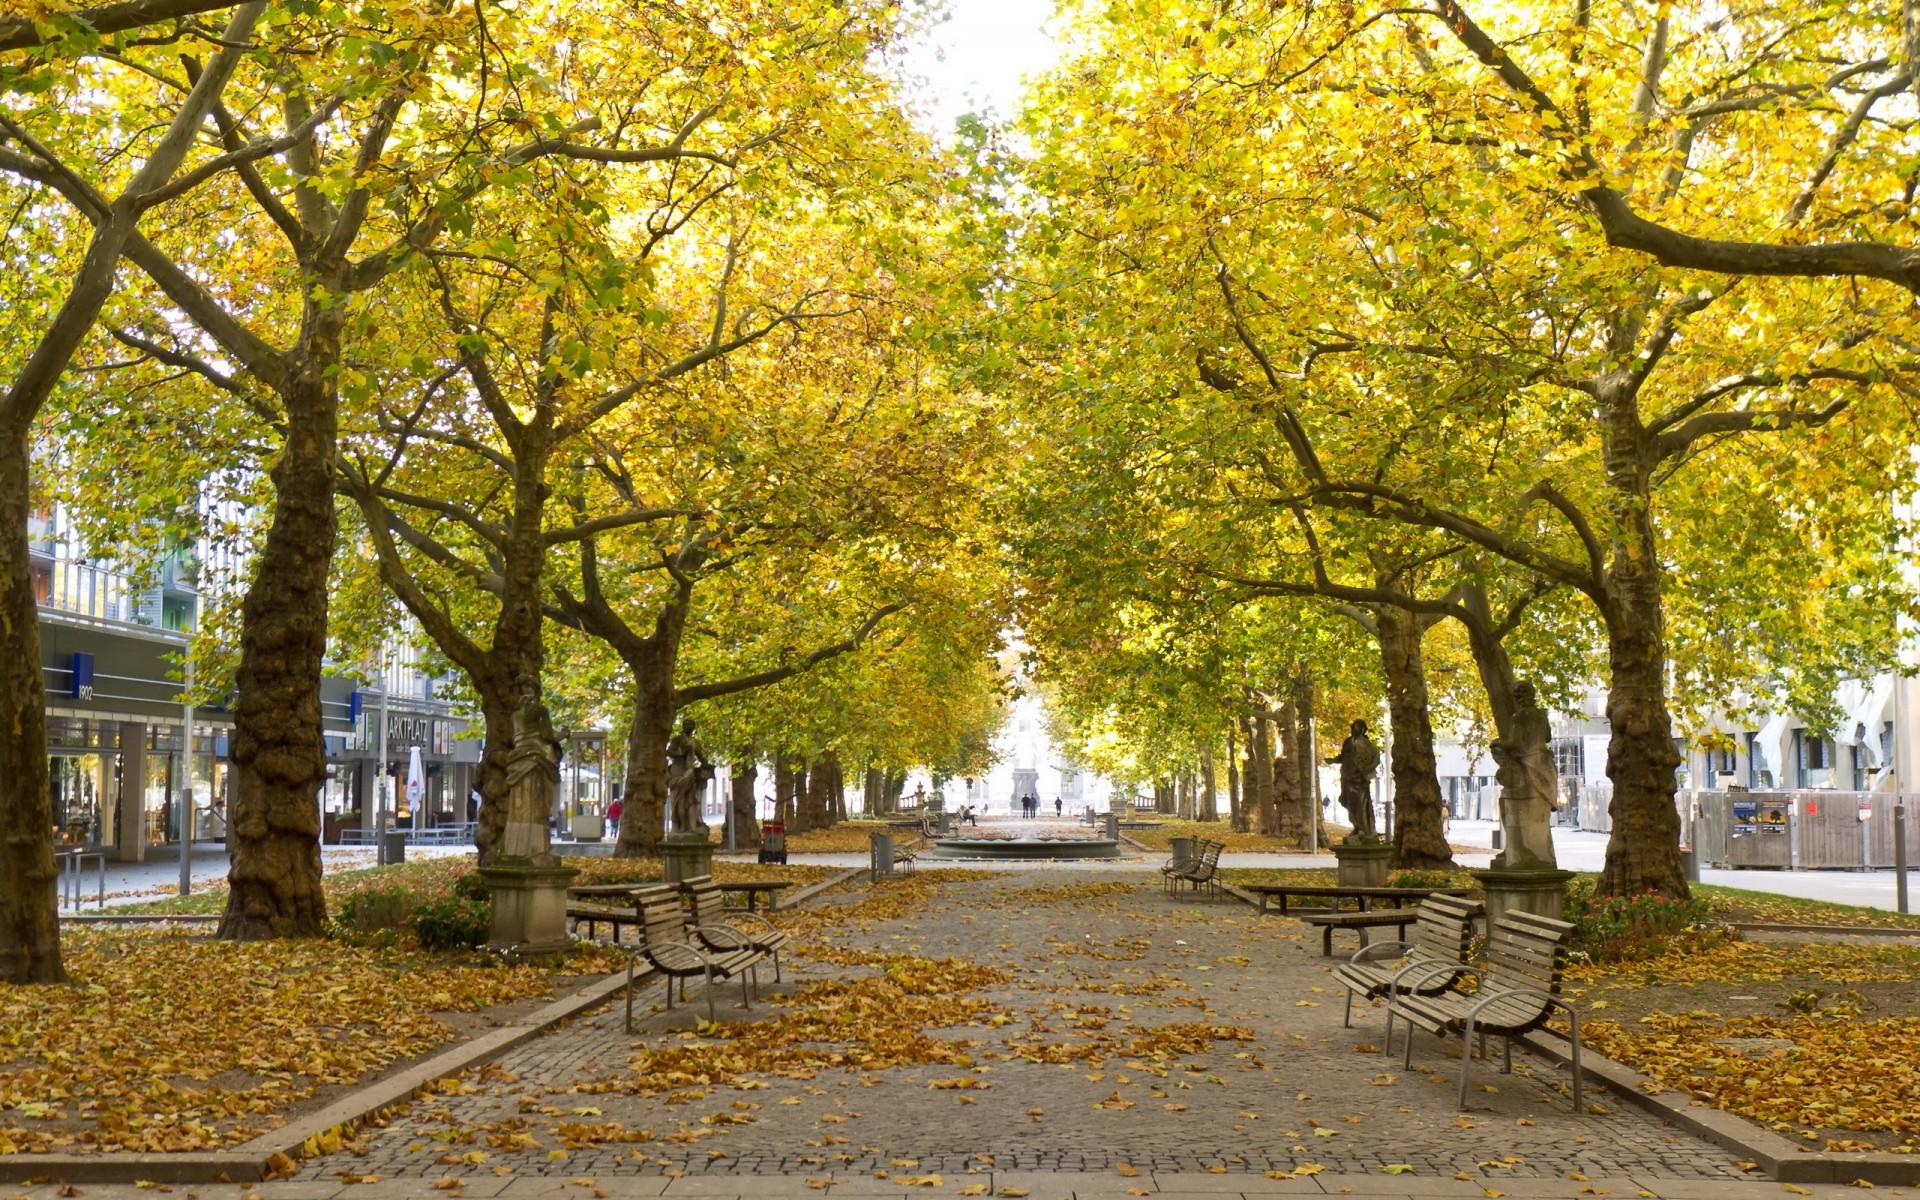 Sidewalk park statue sidewalk bench trees leaves autumn fall